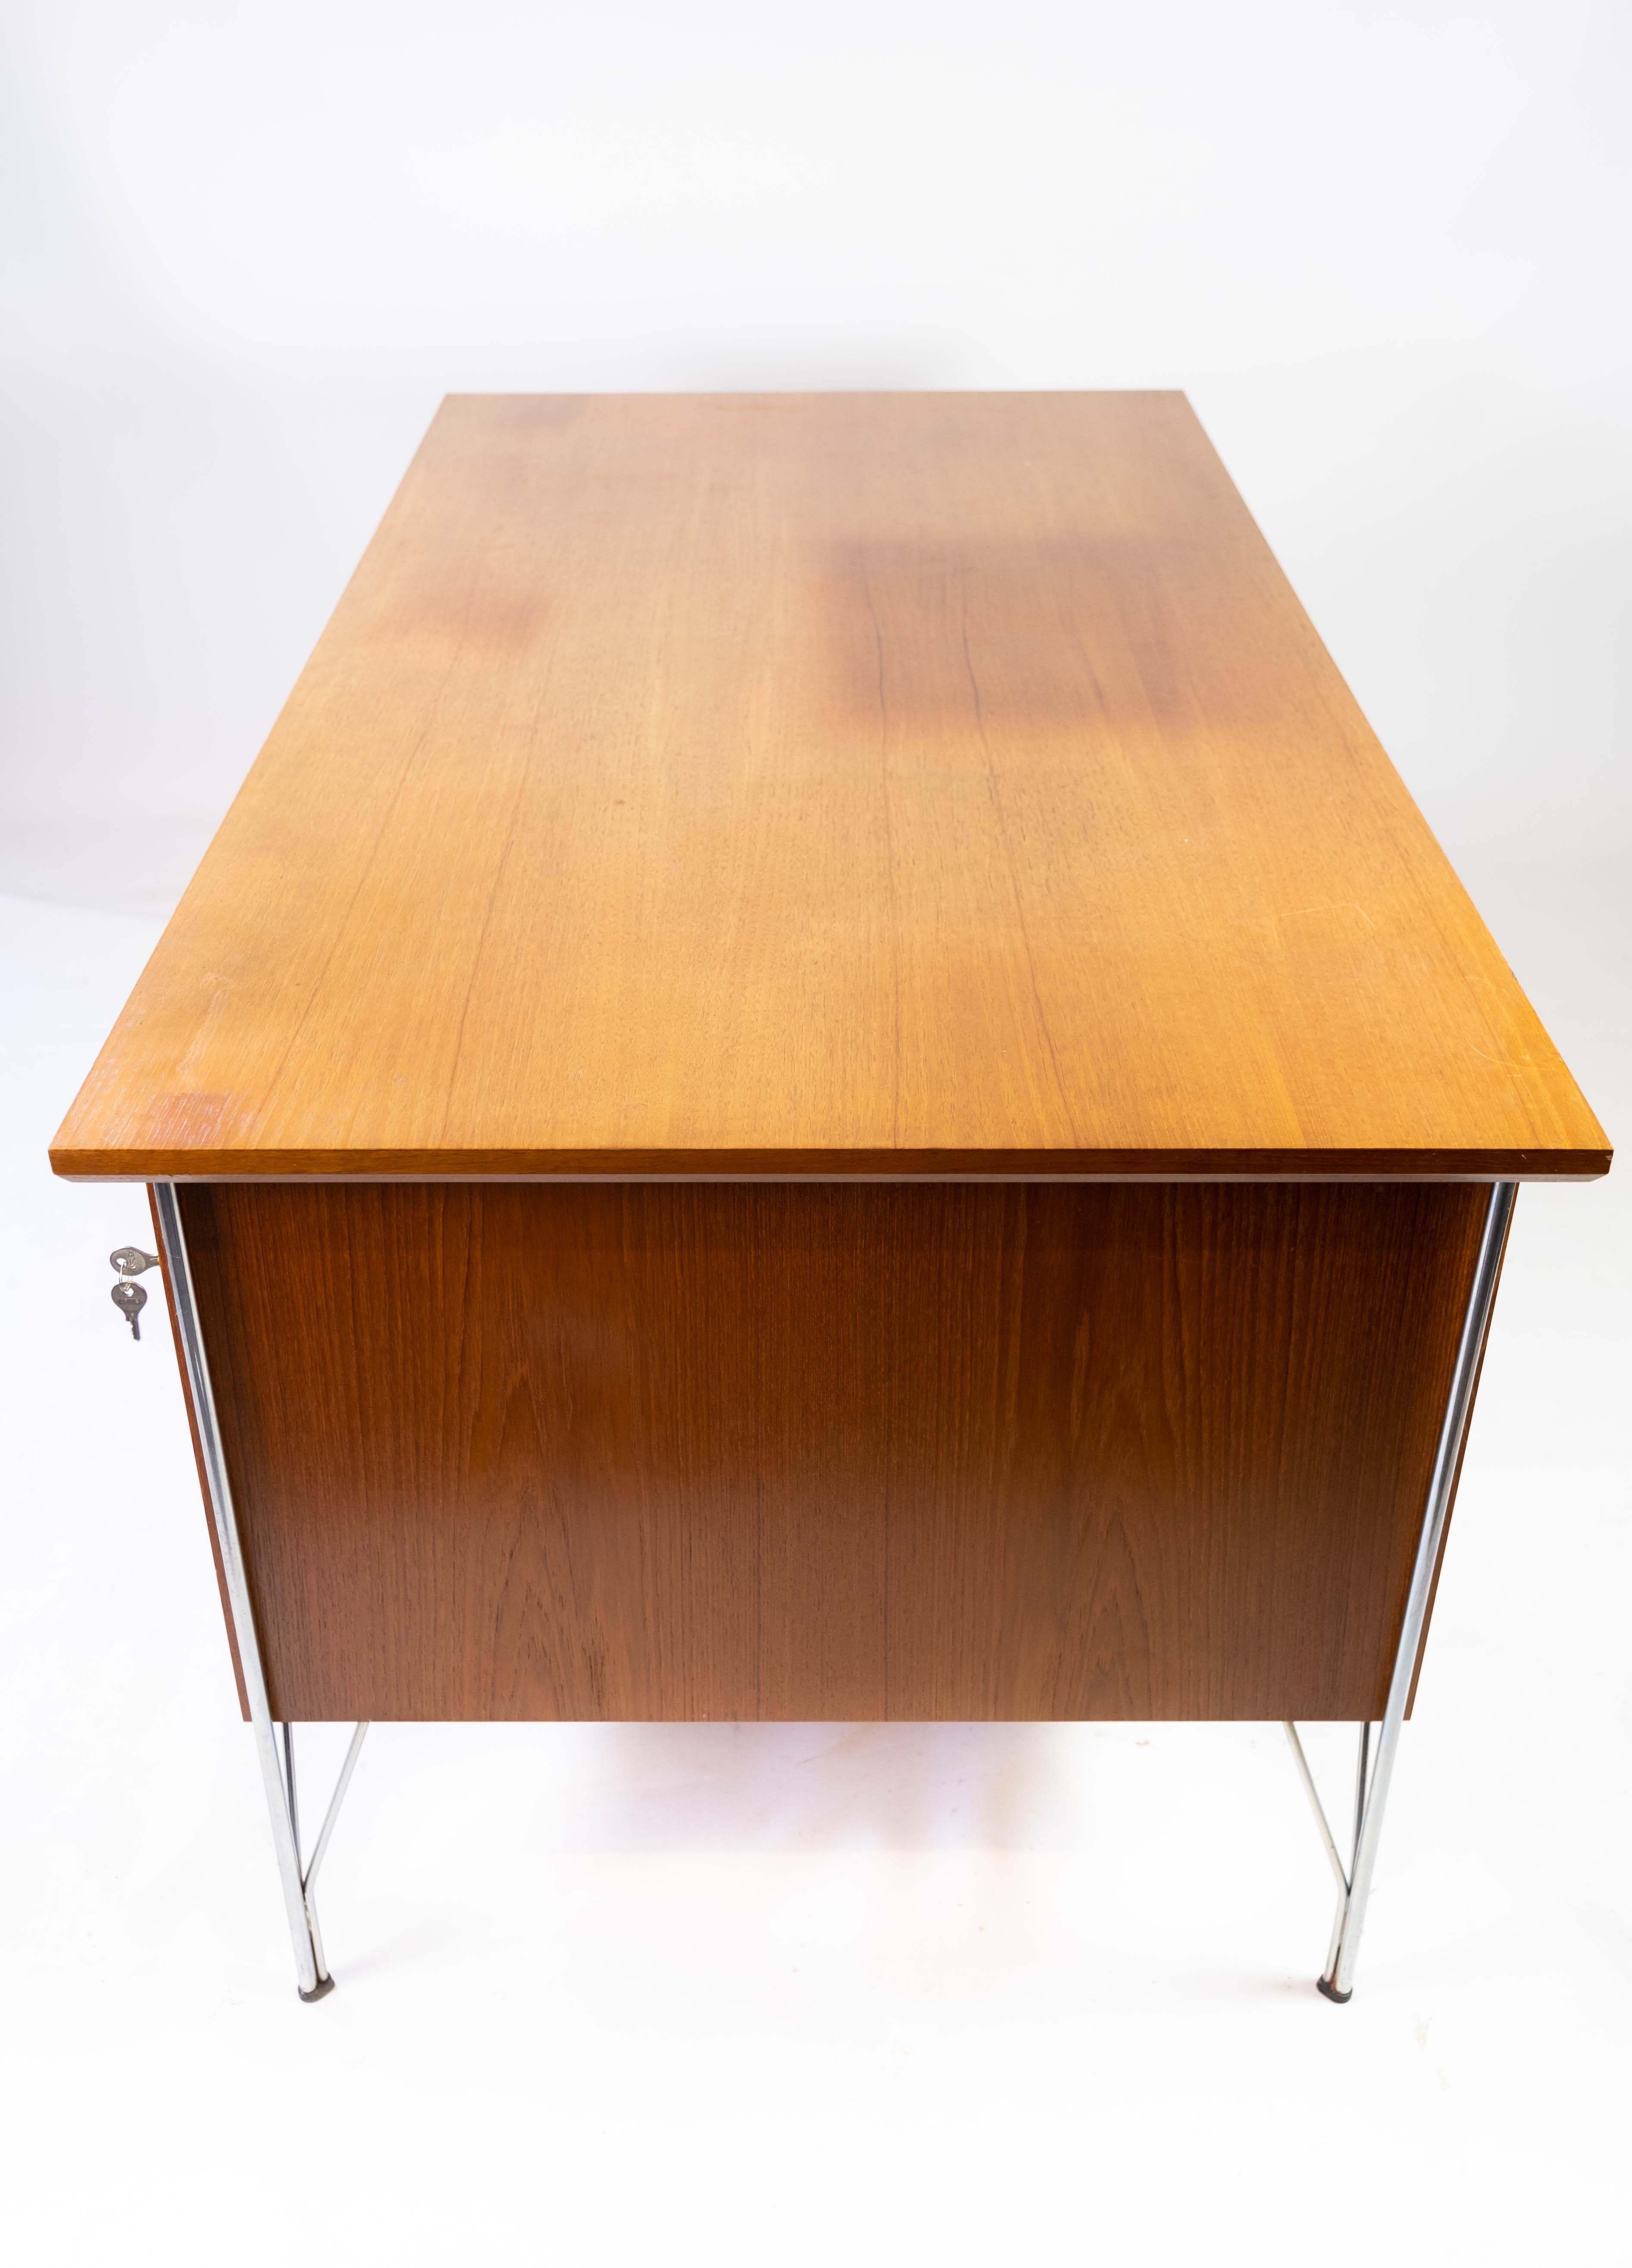 Desk in Teak of Danish Design from the 1970s For Sale 3